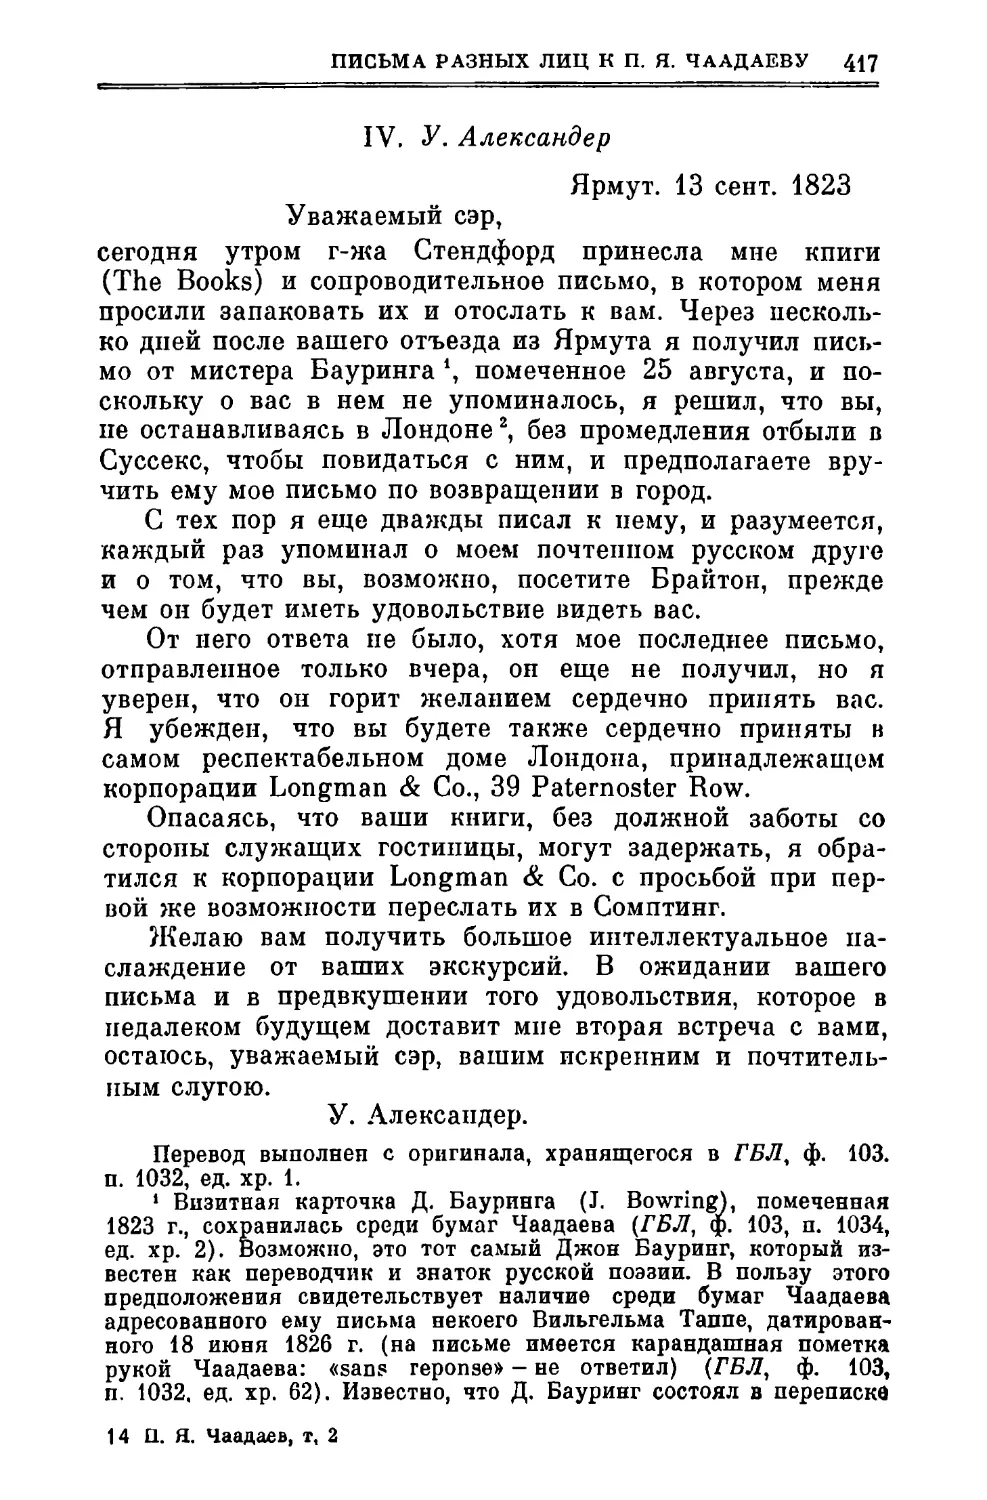 IV. Александер У. 13.IX.1823